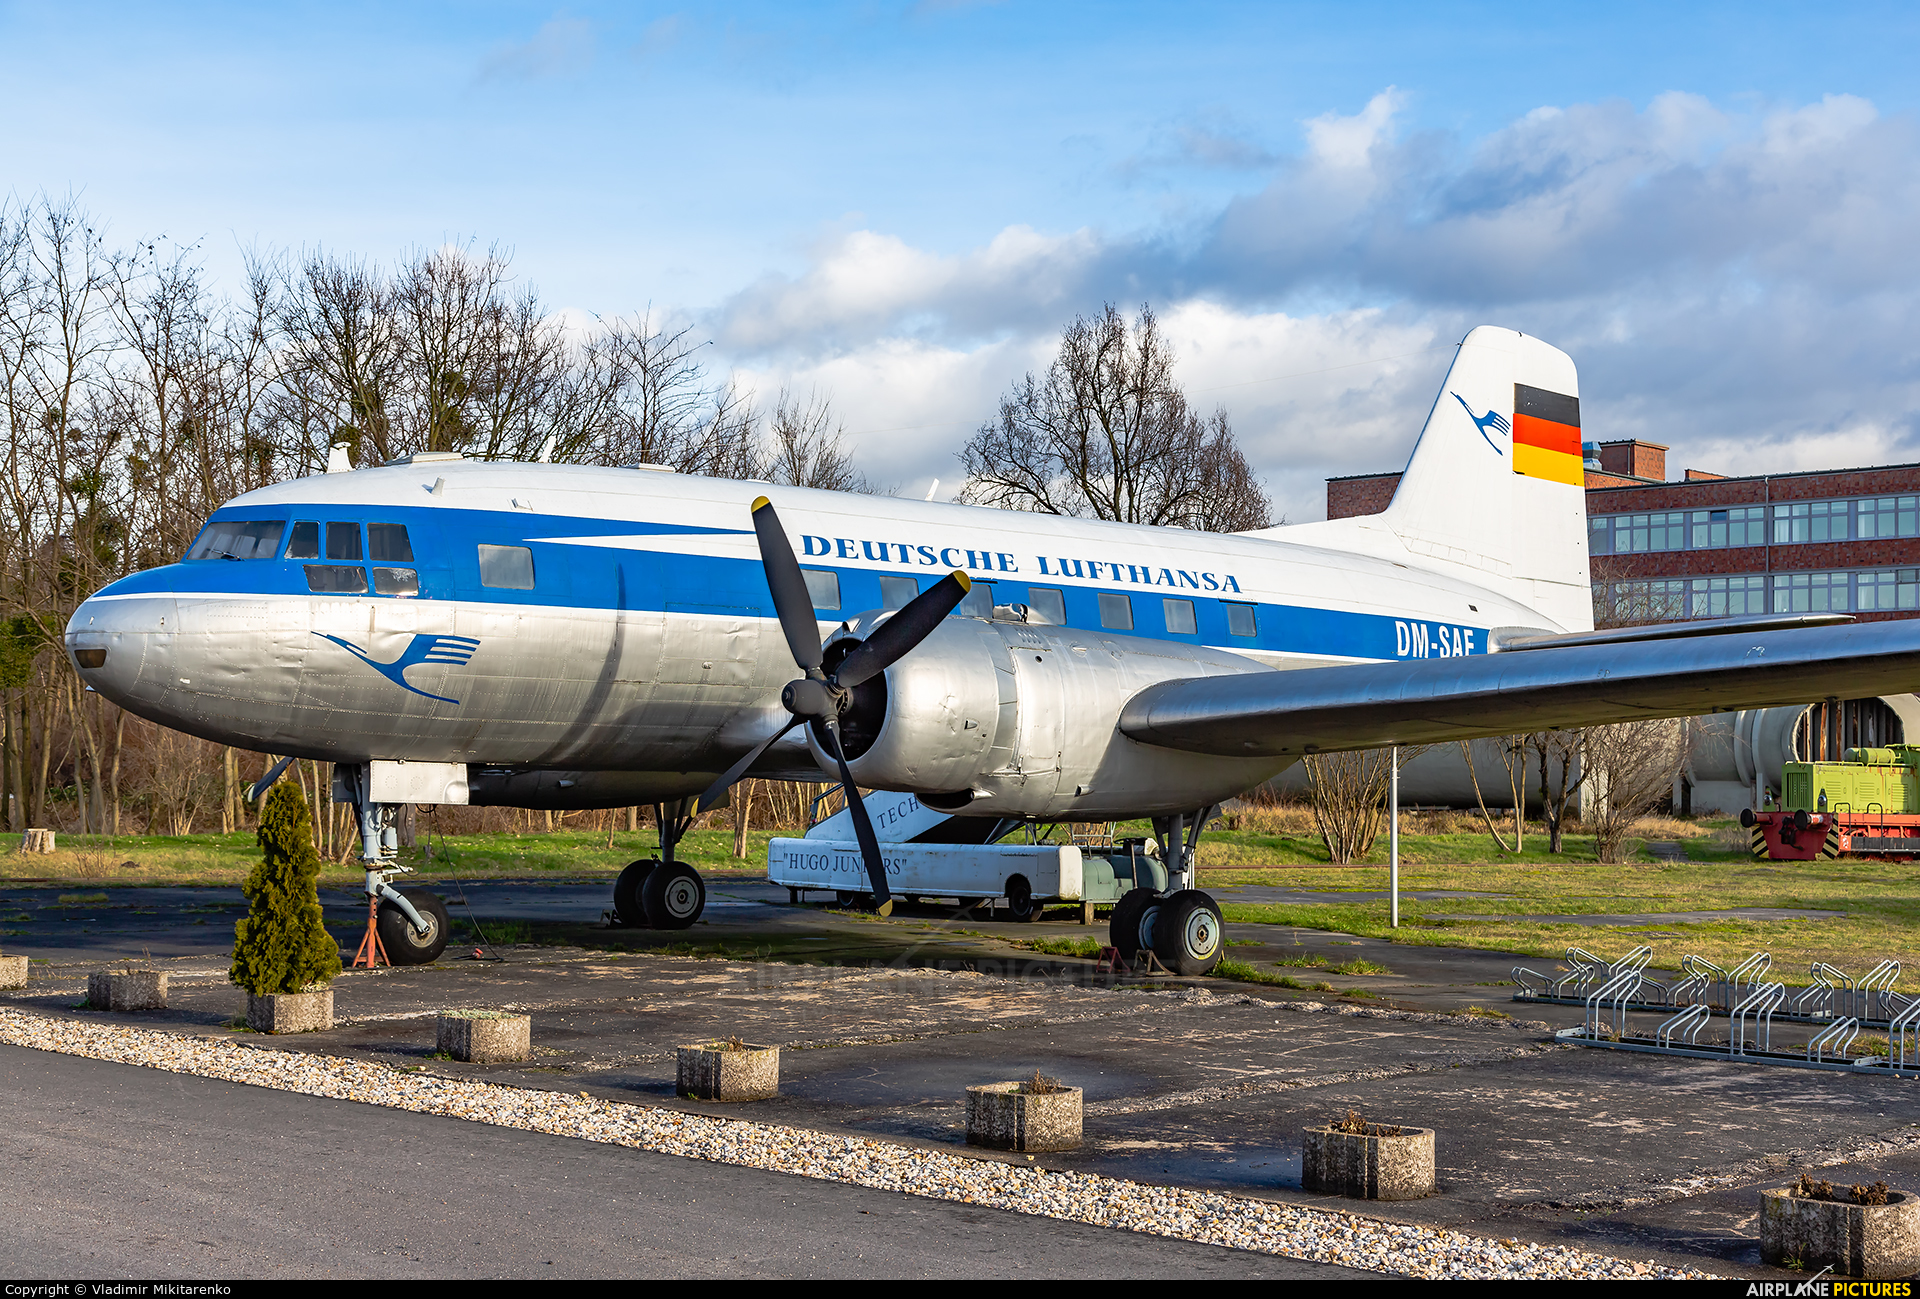 Lufthansa DM-SAF aircraft at Dessau